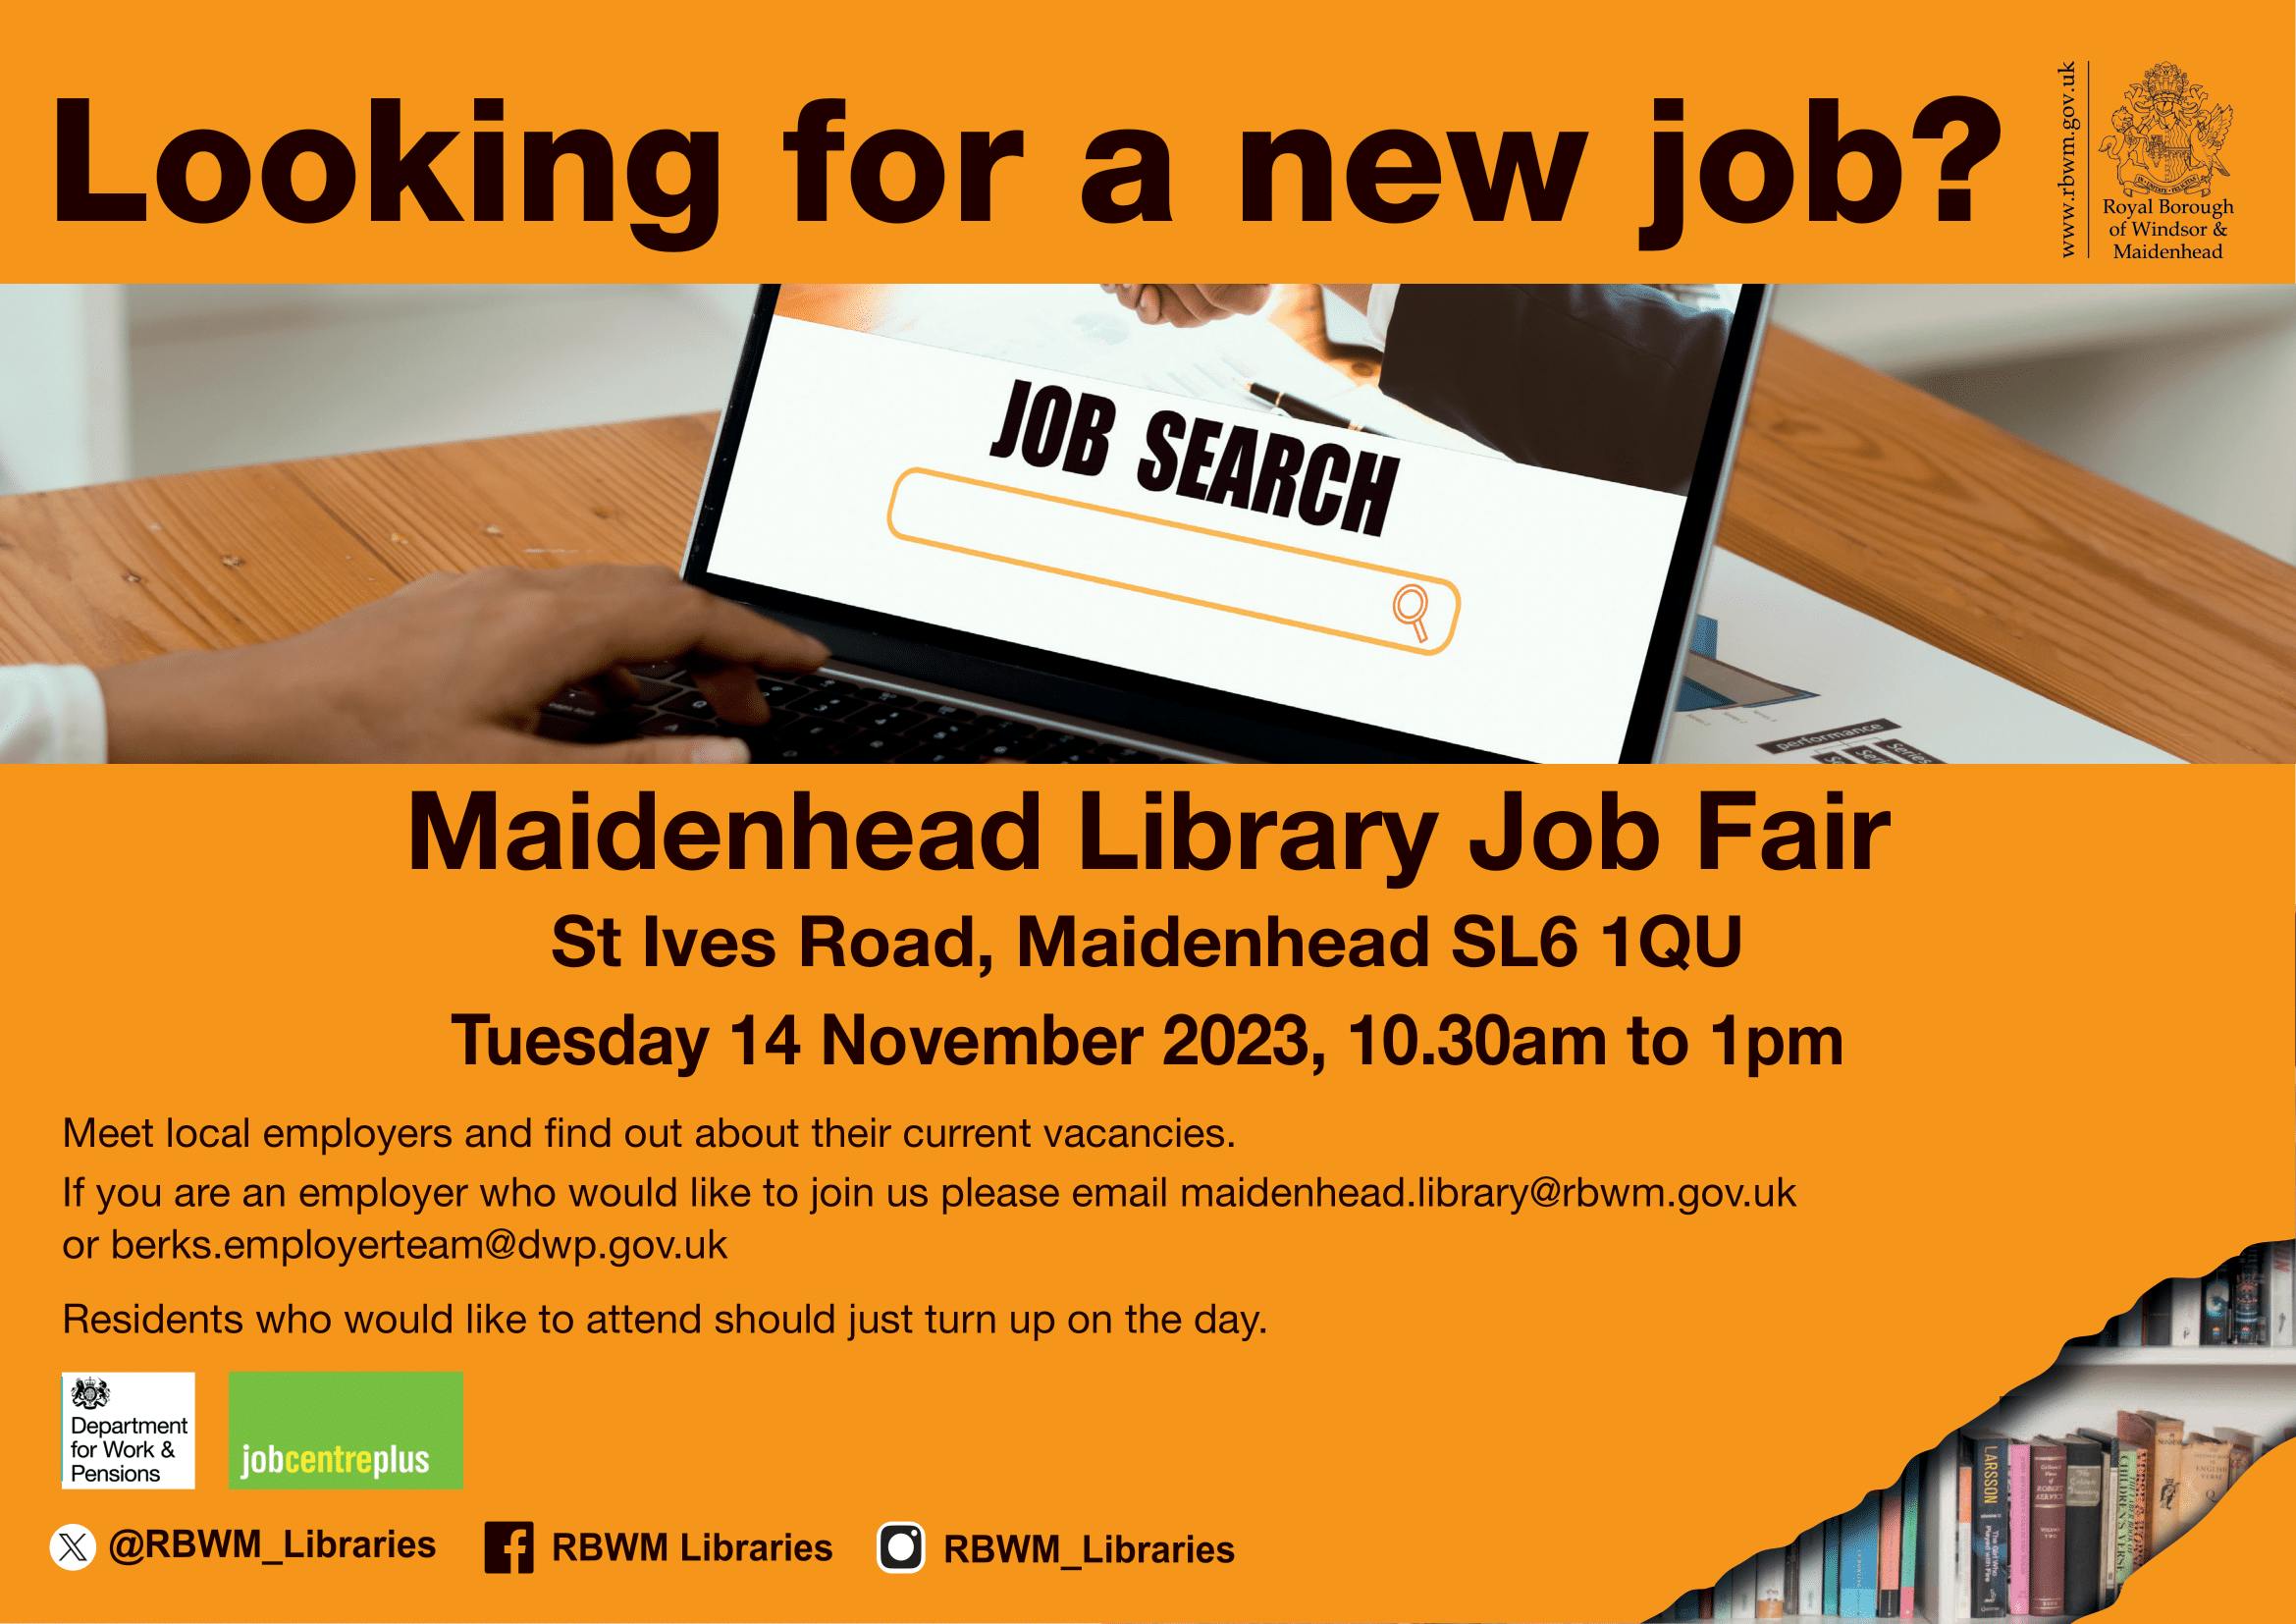 Maidenhead Library job fair Tuesday 14 November 2023 A4 landscape-1.png